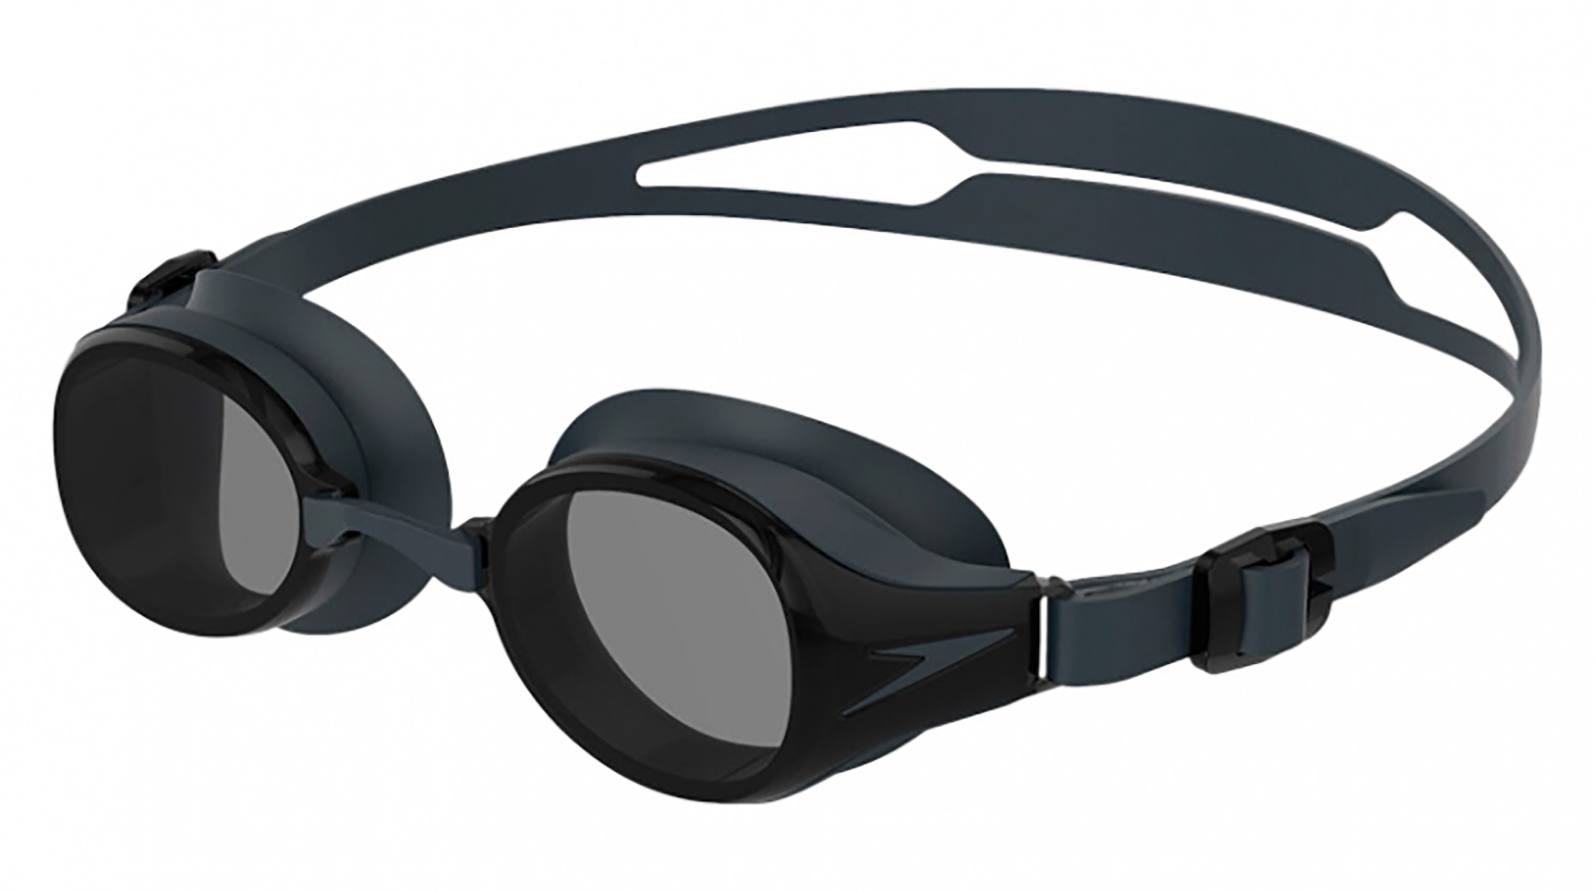 Speedo Очки для плавания Hydropure Optical F808 -2,5 speedo очки для плавания hydropure optical f809 4 0